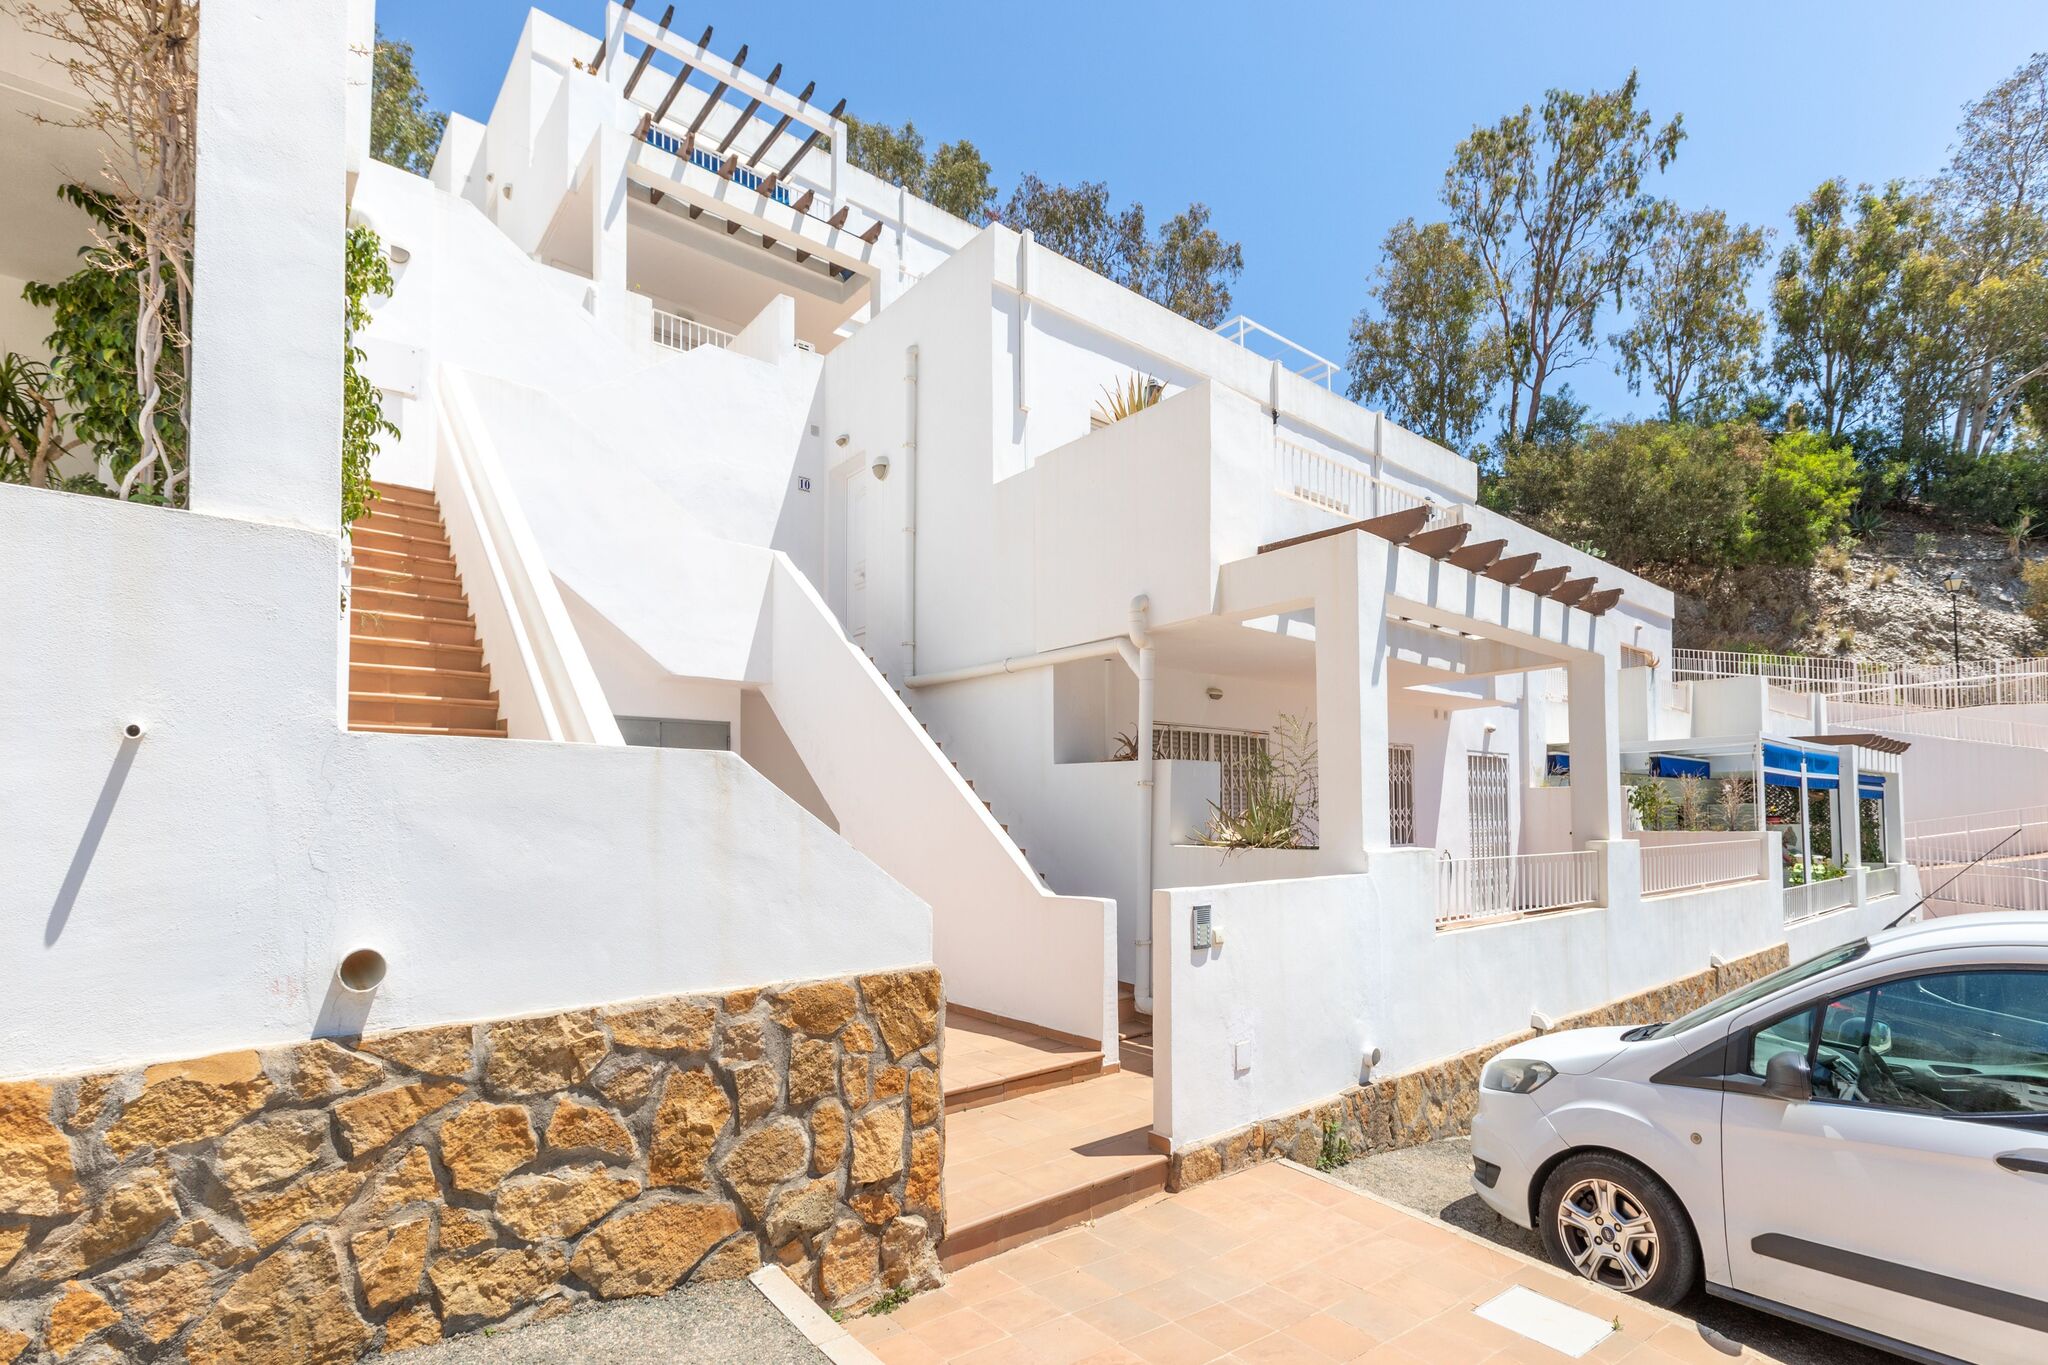 Maison de vacances Regal à Costa Almeria avec piscine